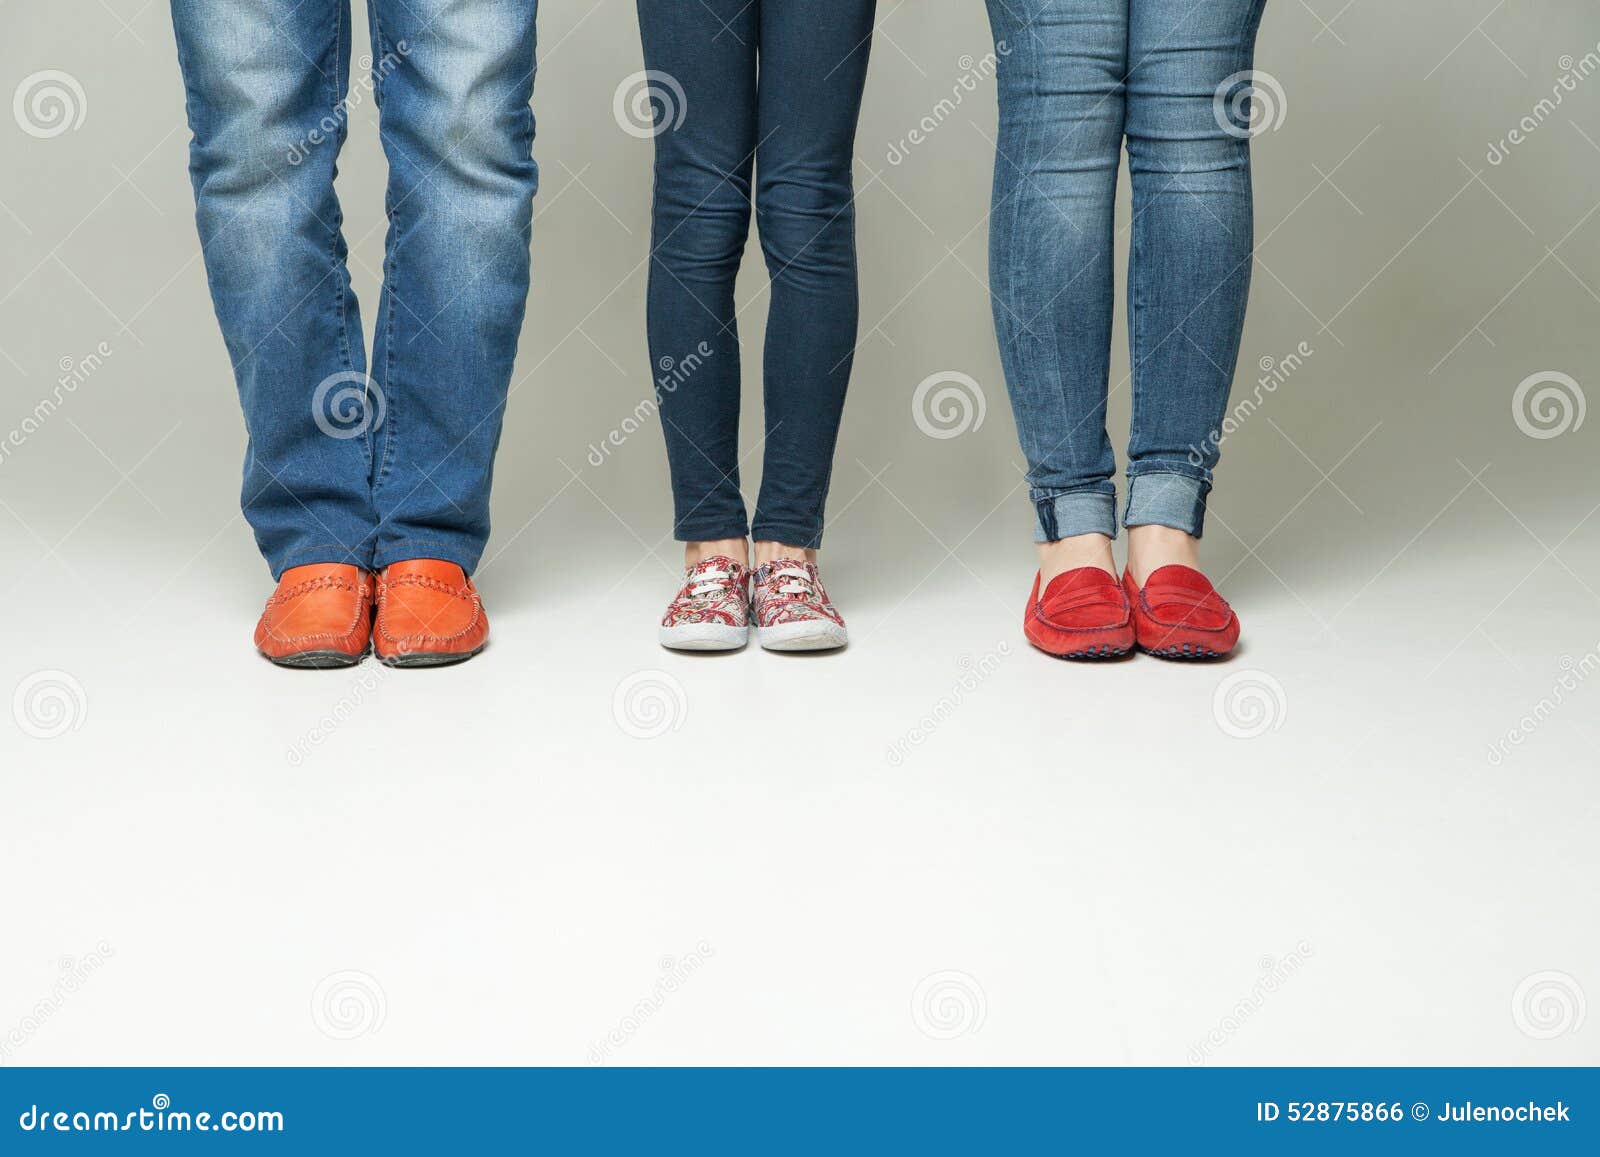 I like wearing jeans. Ноги мамы в джинсах. Молодежь улица ноги джинсы кеды клипарт.